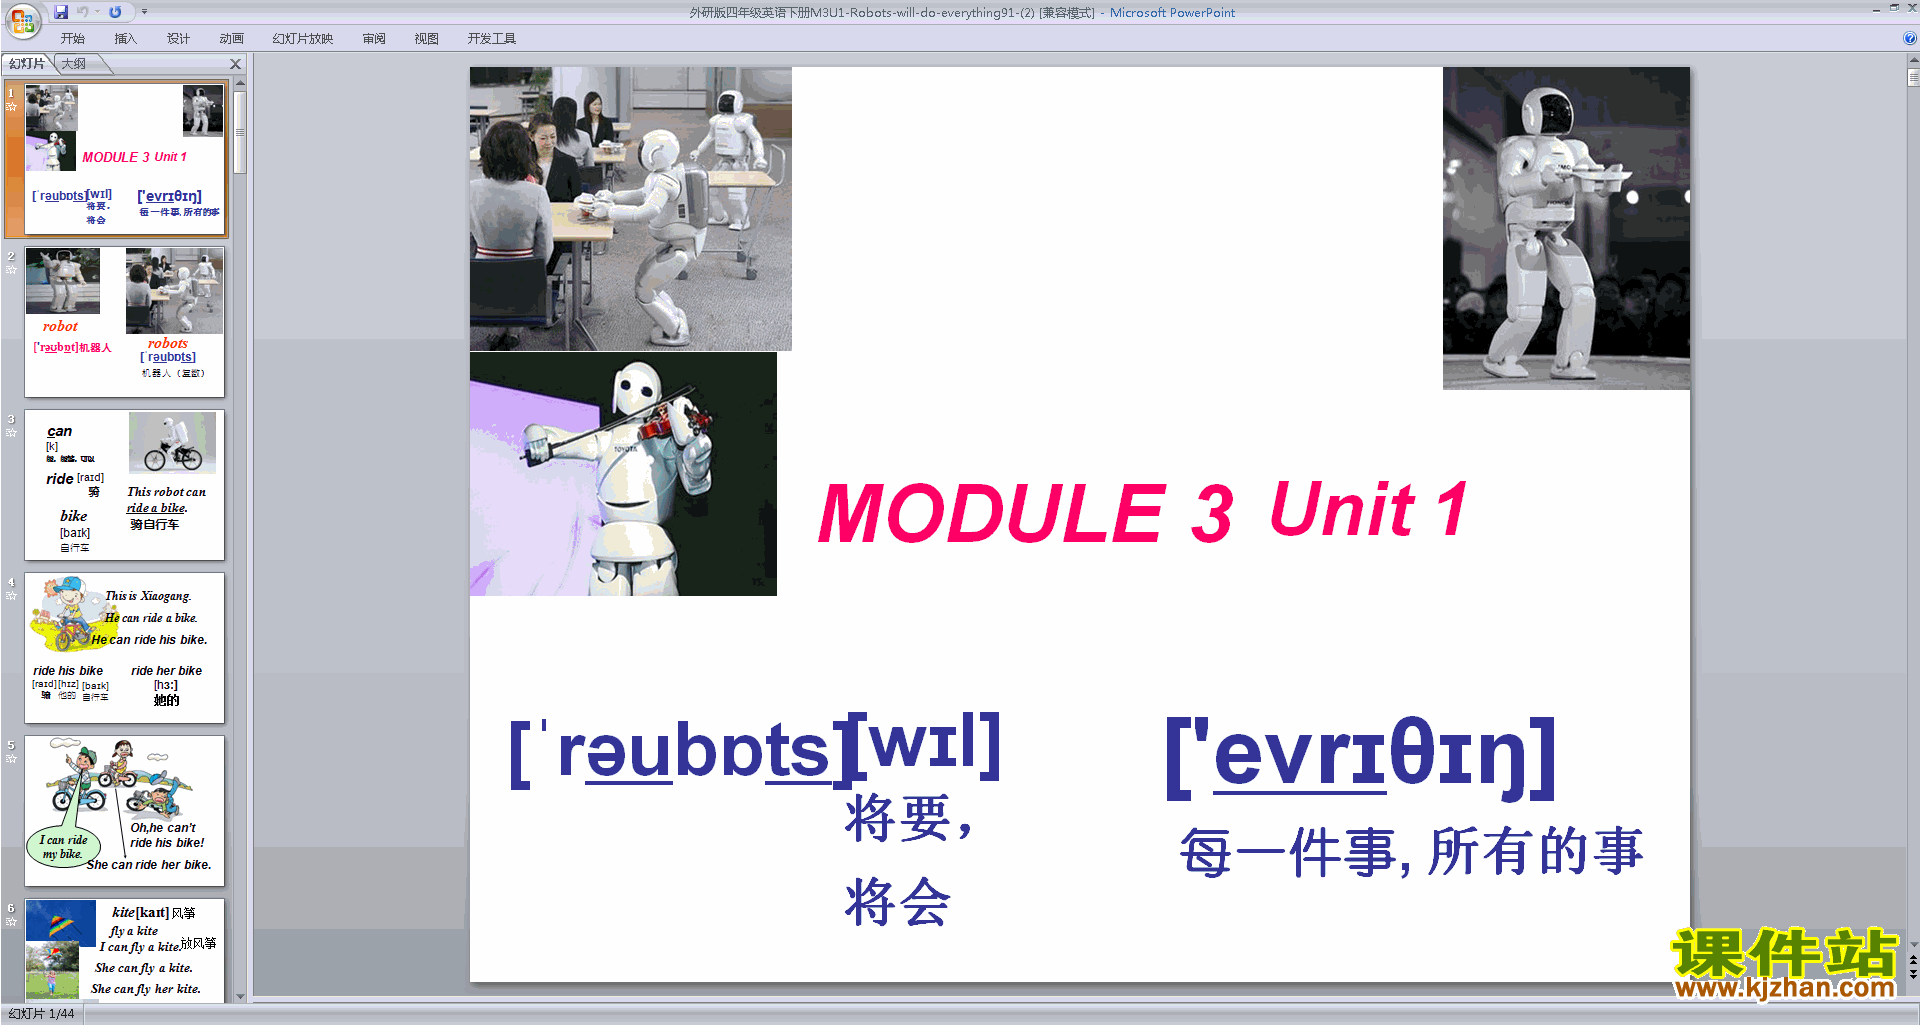 пUnit1 Robots will do everythingpptμ